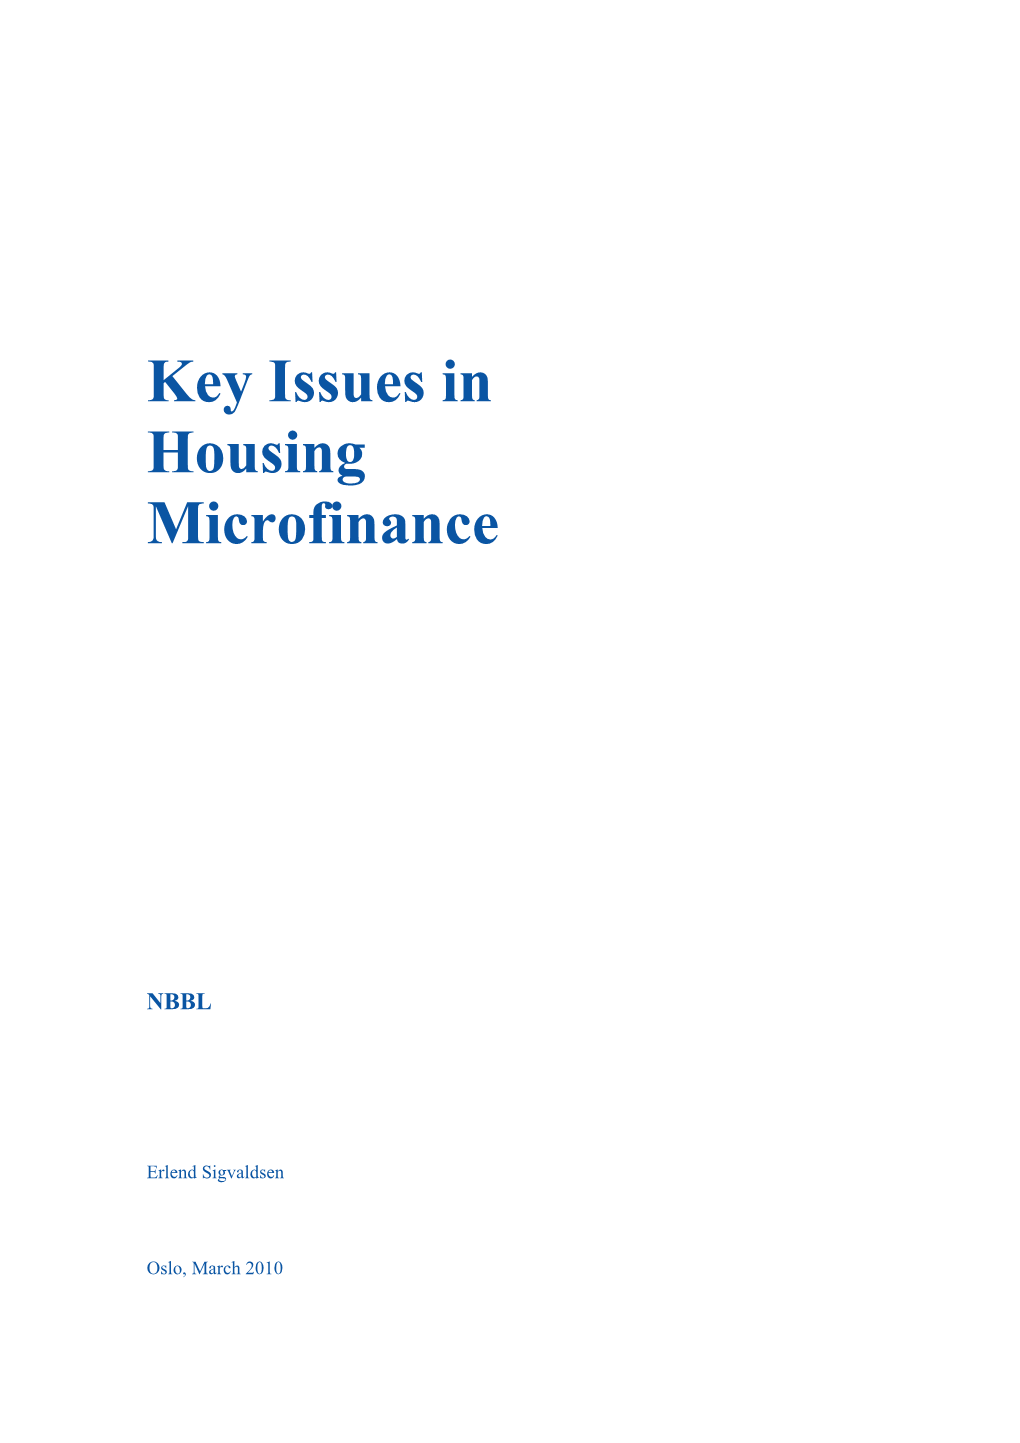 Key Issues in Housing Microfinance